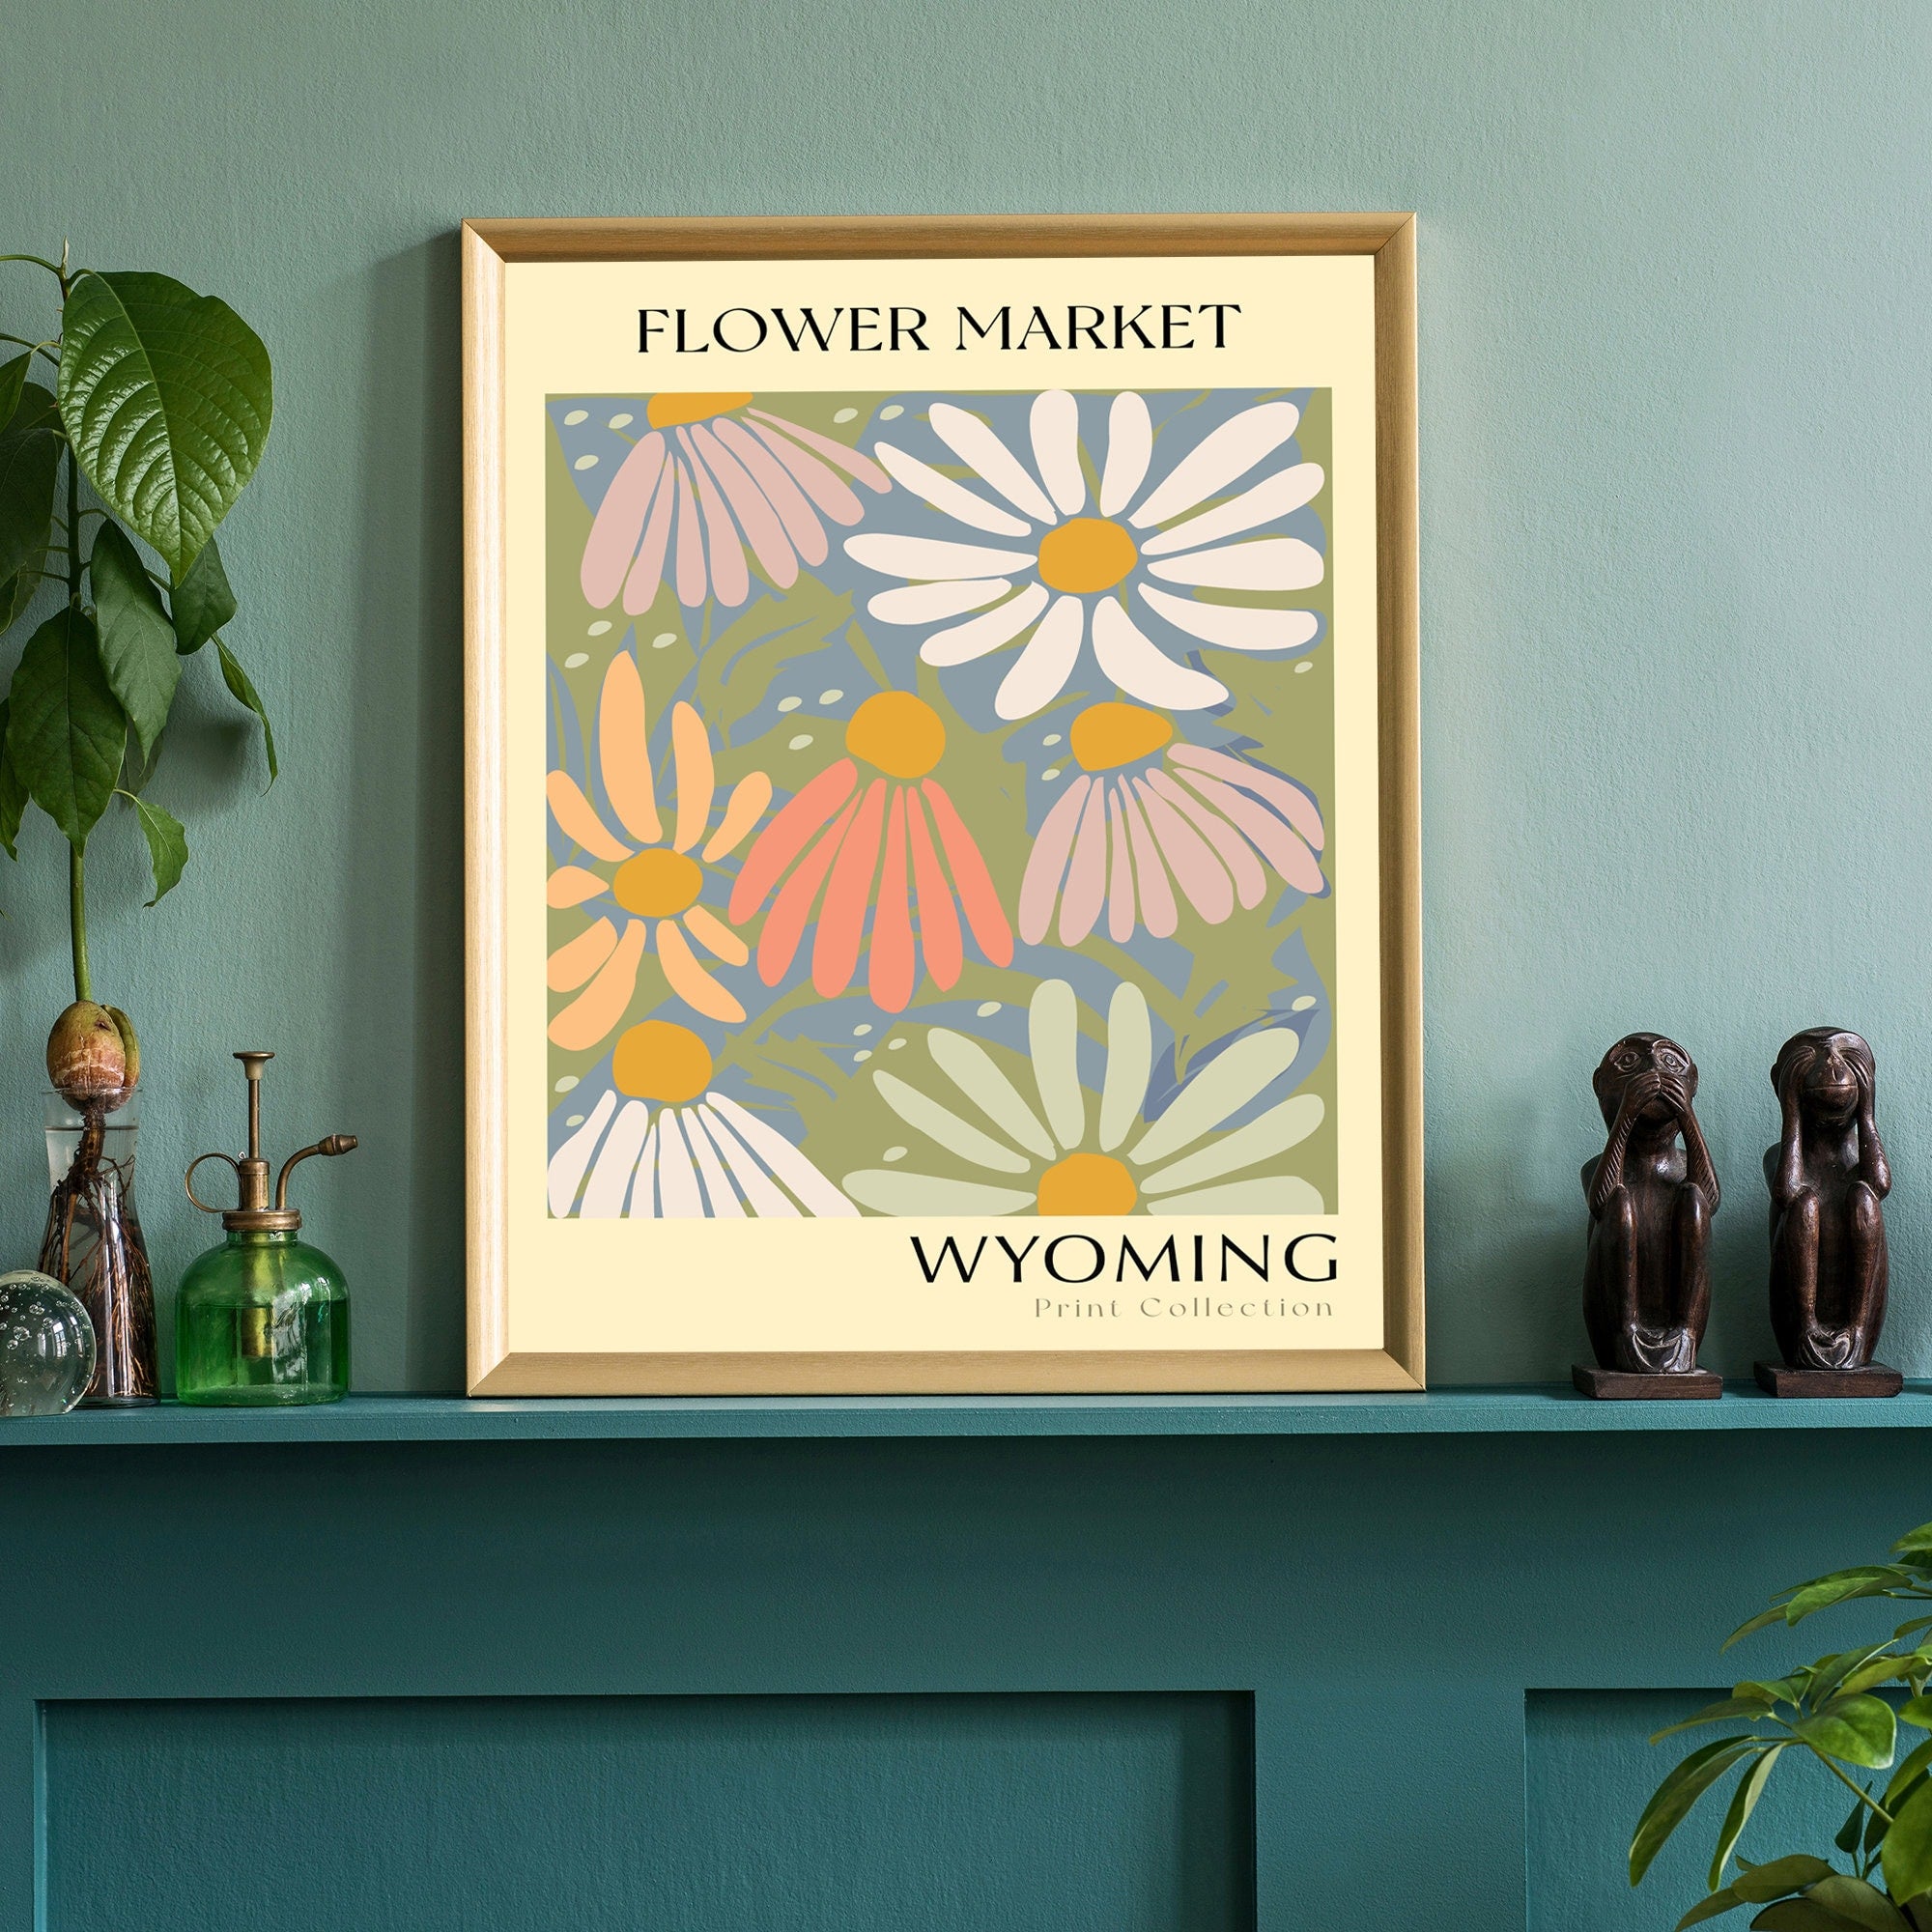 Wyoming State flower print, USA states poster, Wyoming flower market poster, Botanical poster, Nature poster artwork, Boho floral wall art